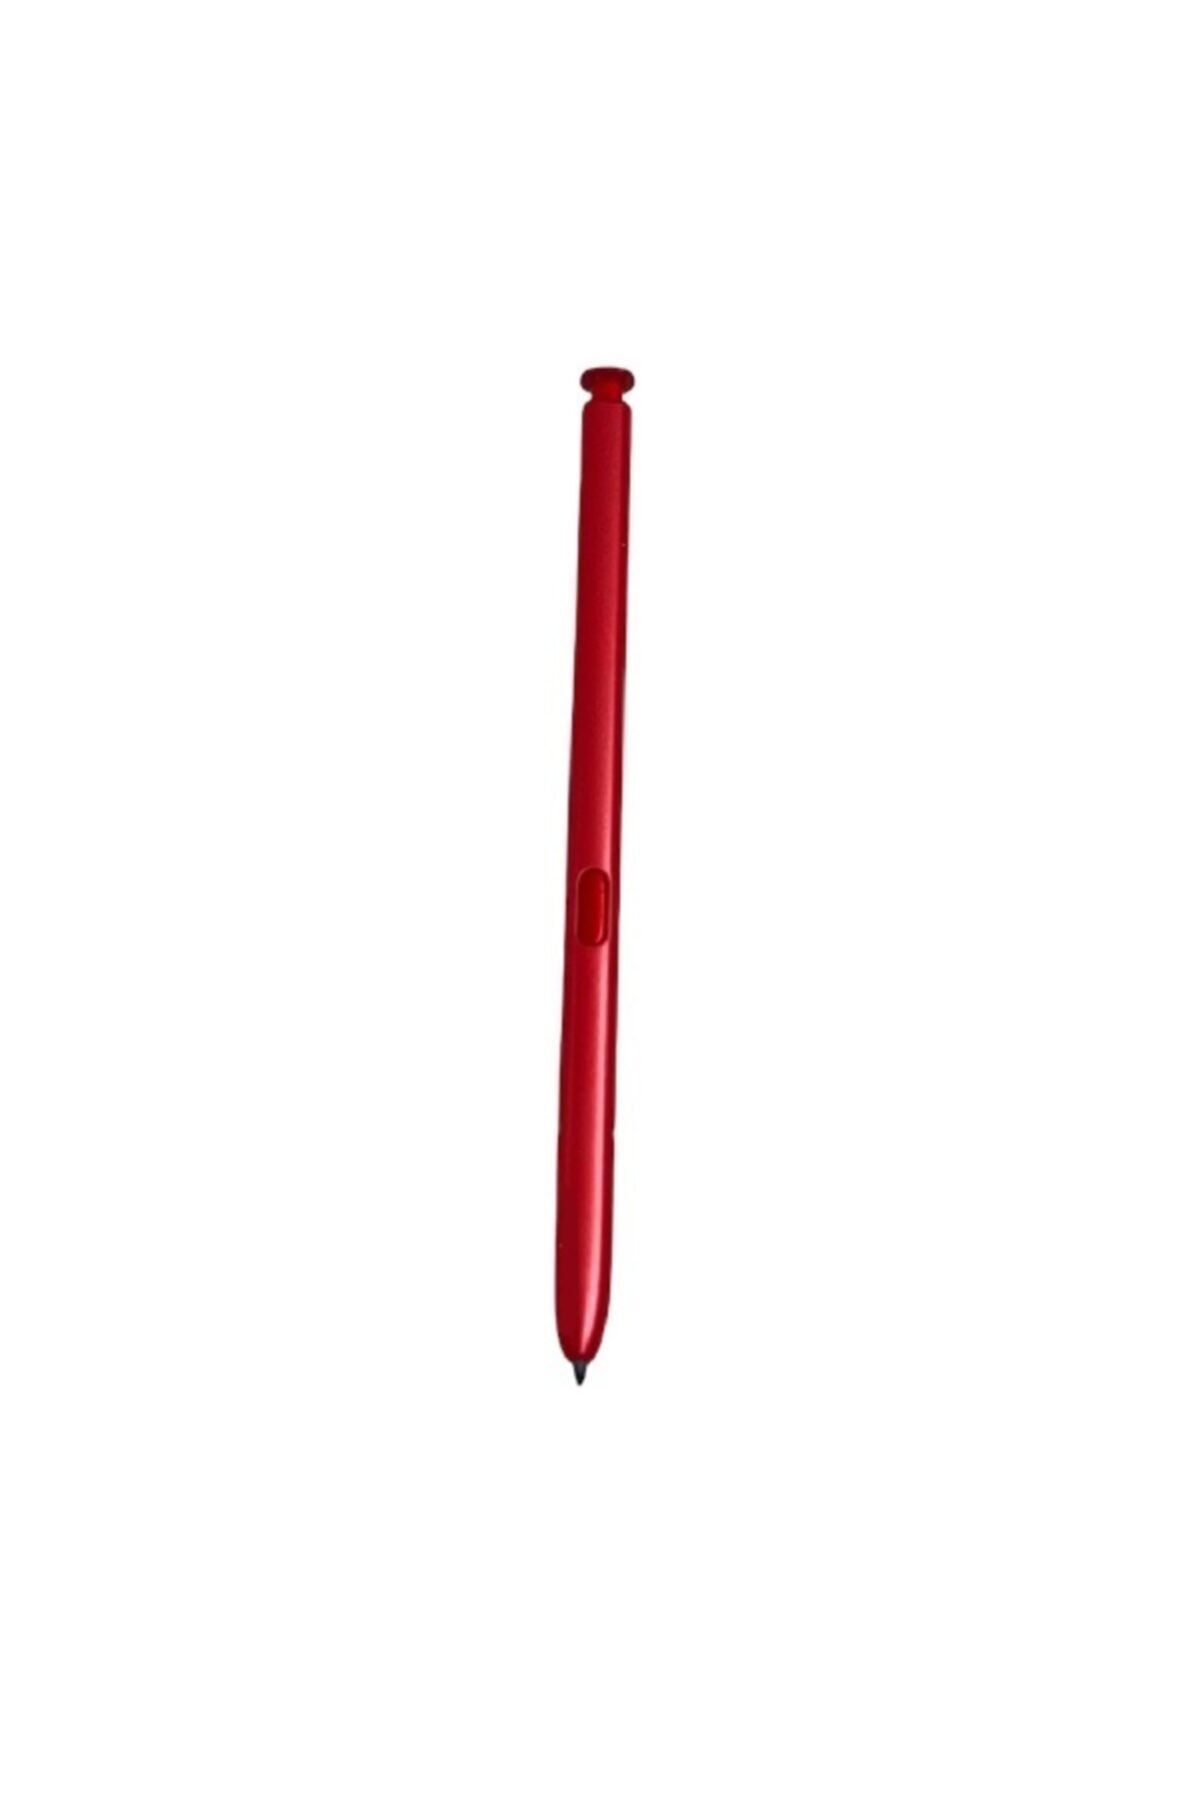 KDR Samsung Galaxy Note 10 Lite N770 Kalem Pen Kırmızı